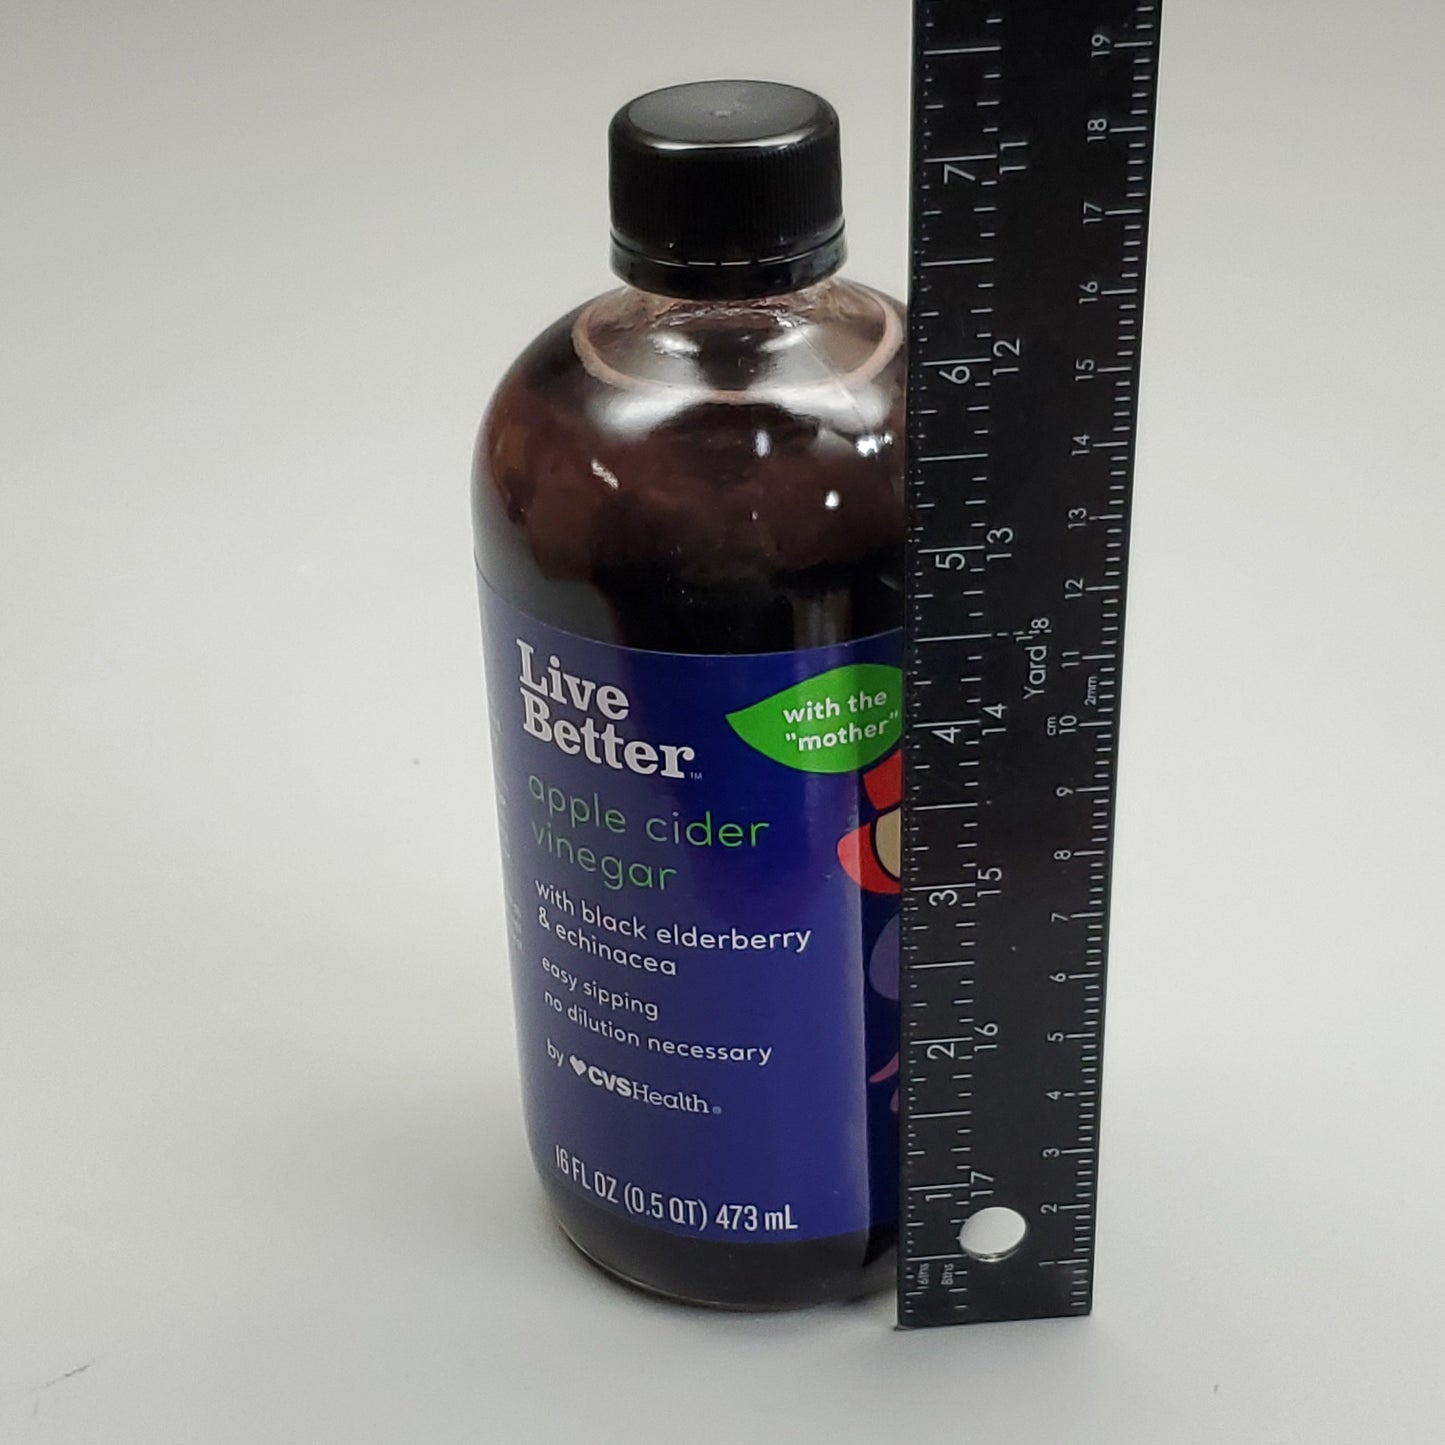 ZA@ CVS HEALTH Live Better Apple Cider Vinegar Elderberry & Echinacea Case of 4: 16 oz( New) A